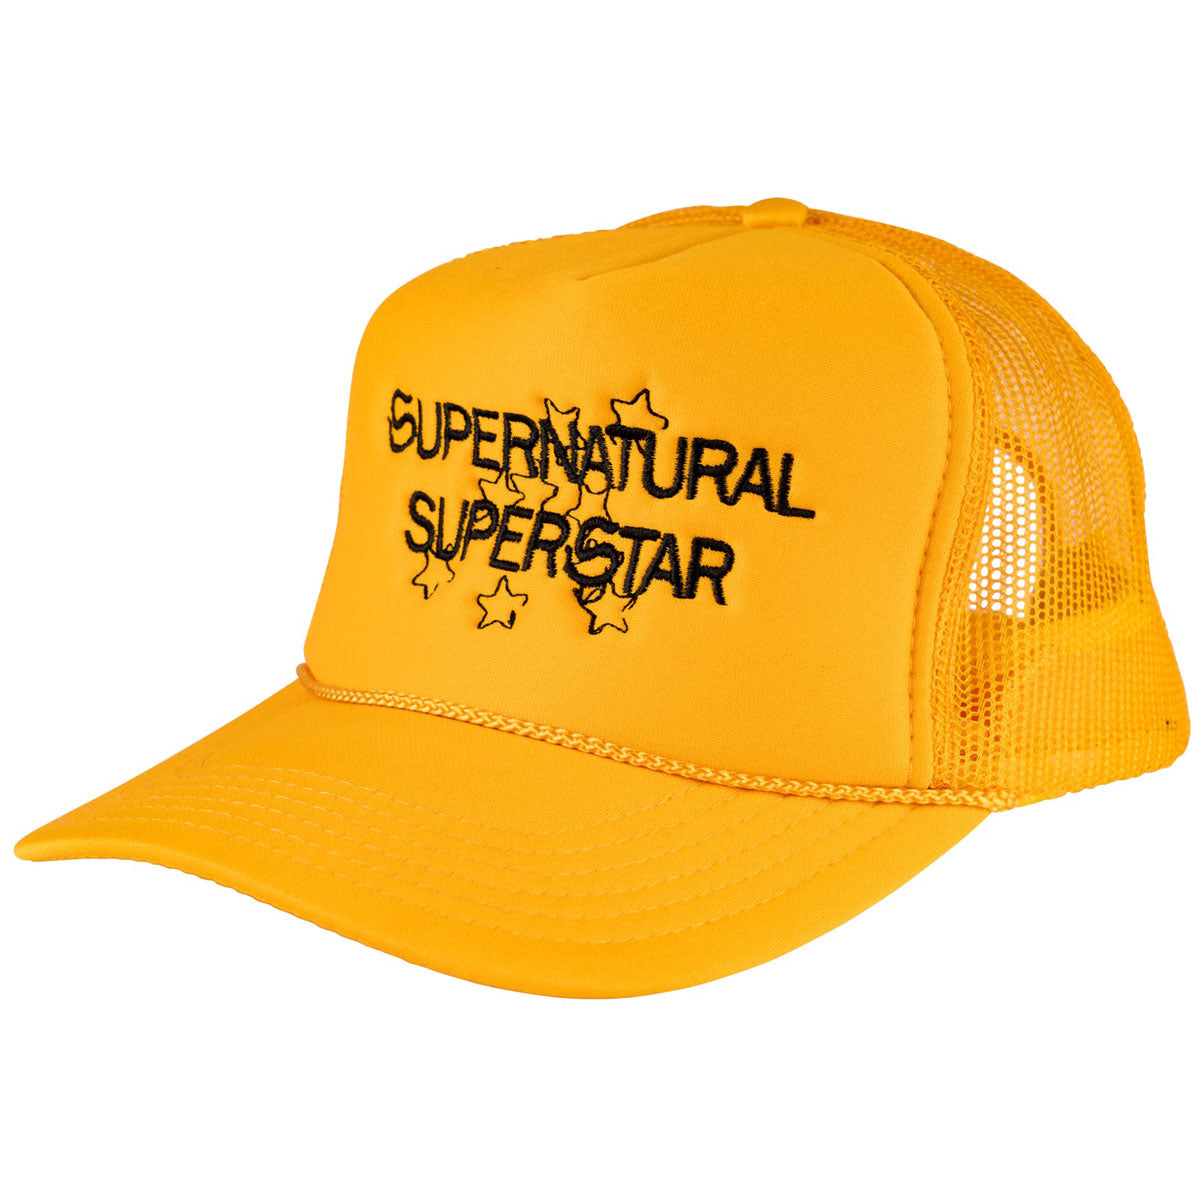 Welcome Superstar Trucker Hat - Yellow image 1